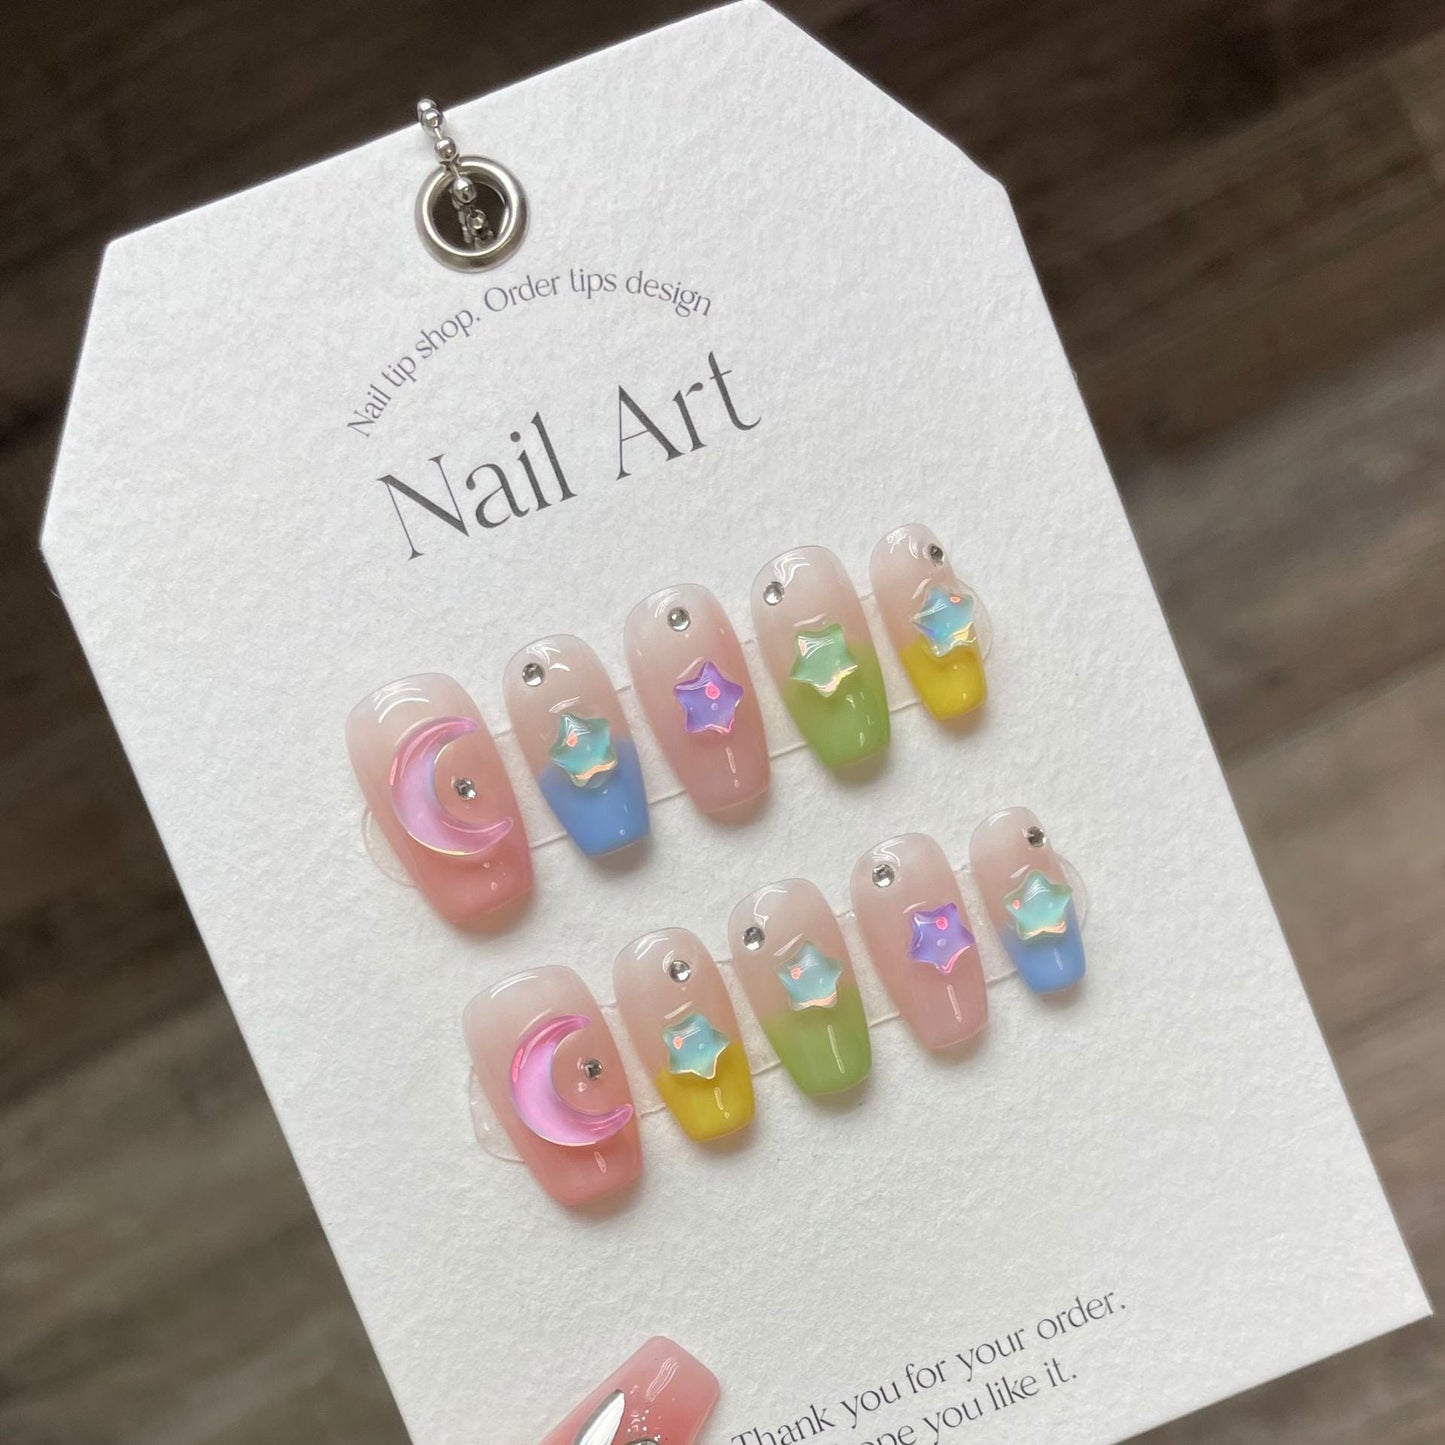 942 Star Macaron style press on nails 100% handmade false nails pink mixed color